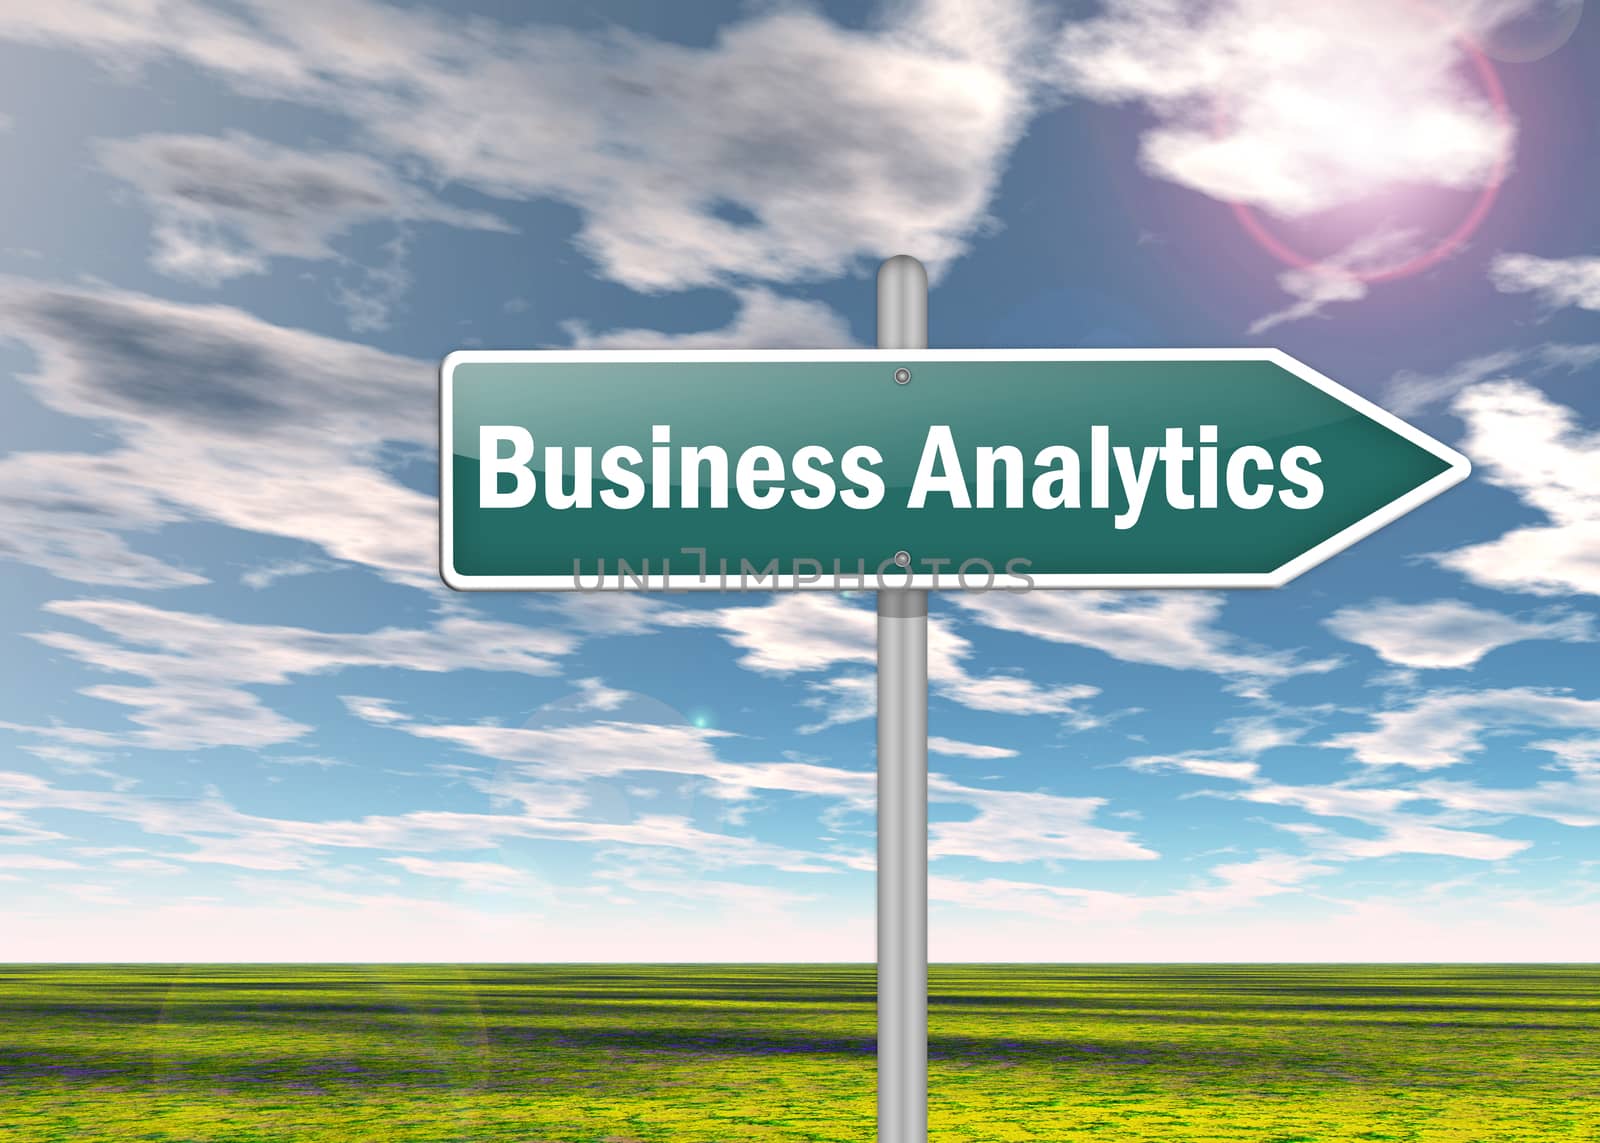 Signpost "Business Analytics"